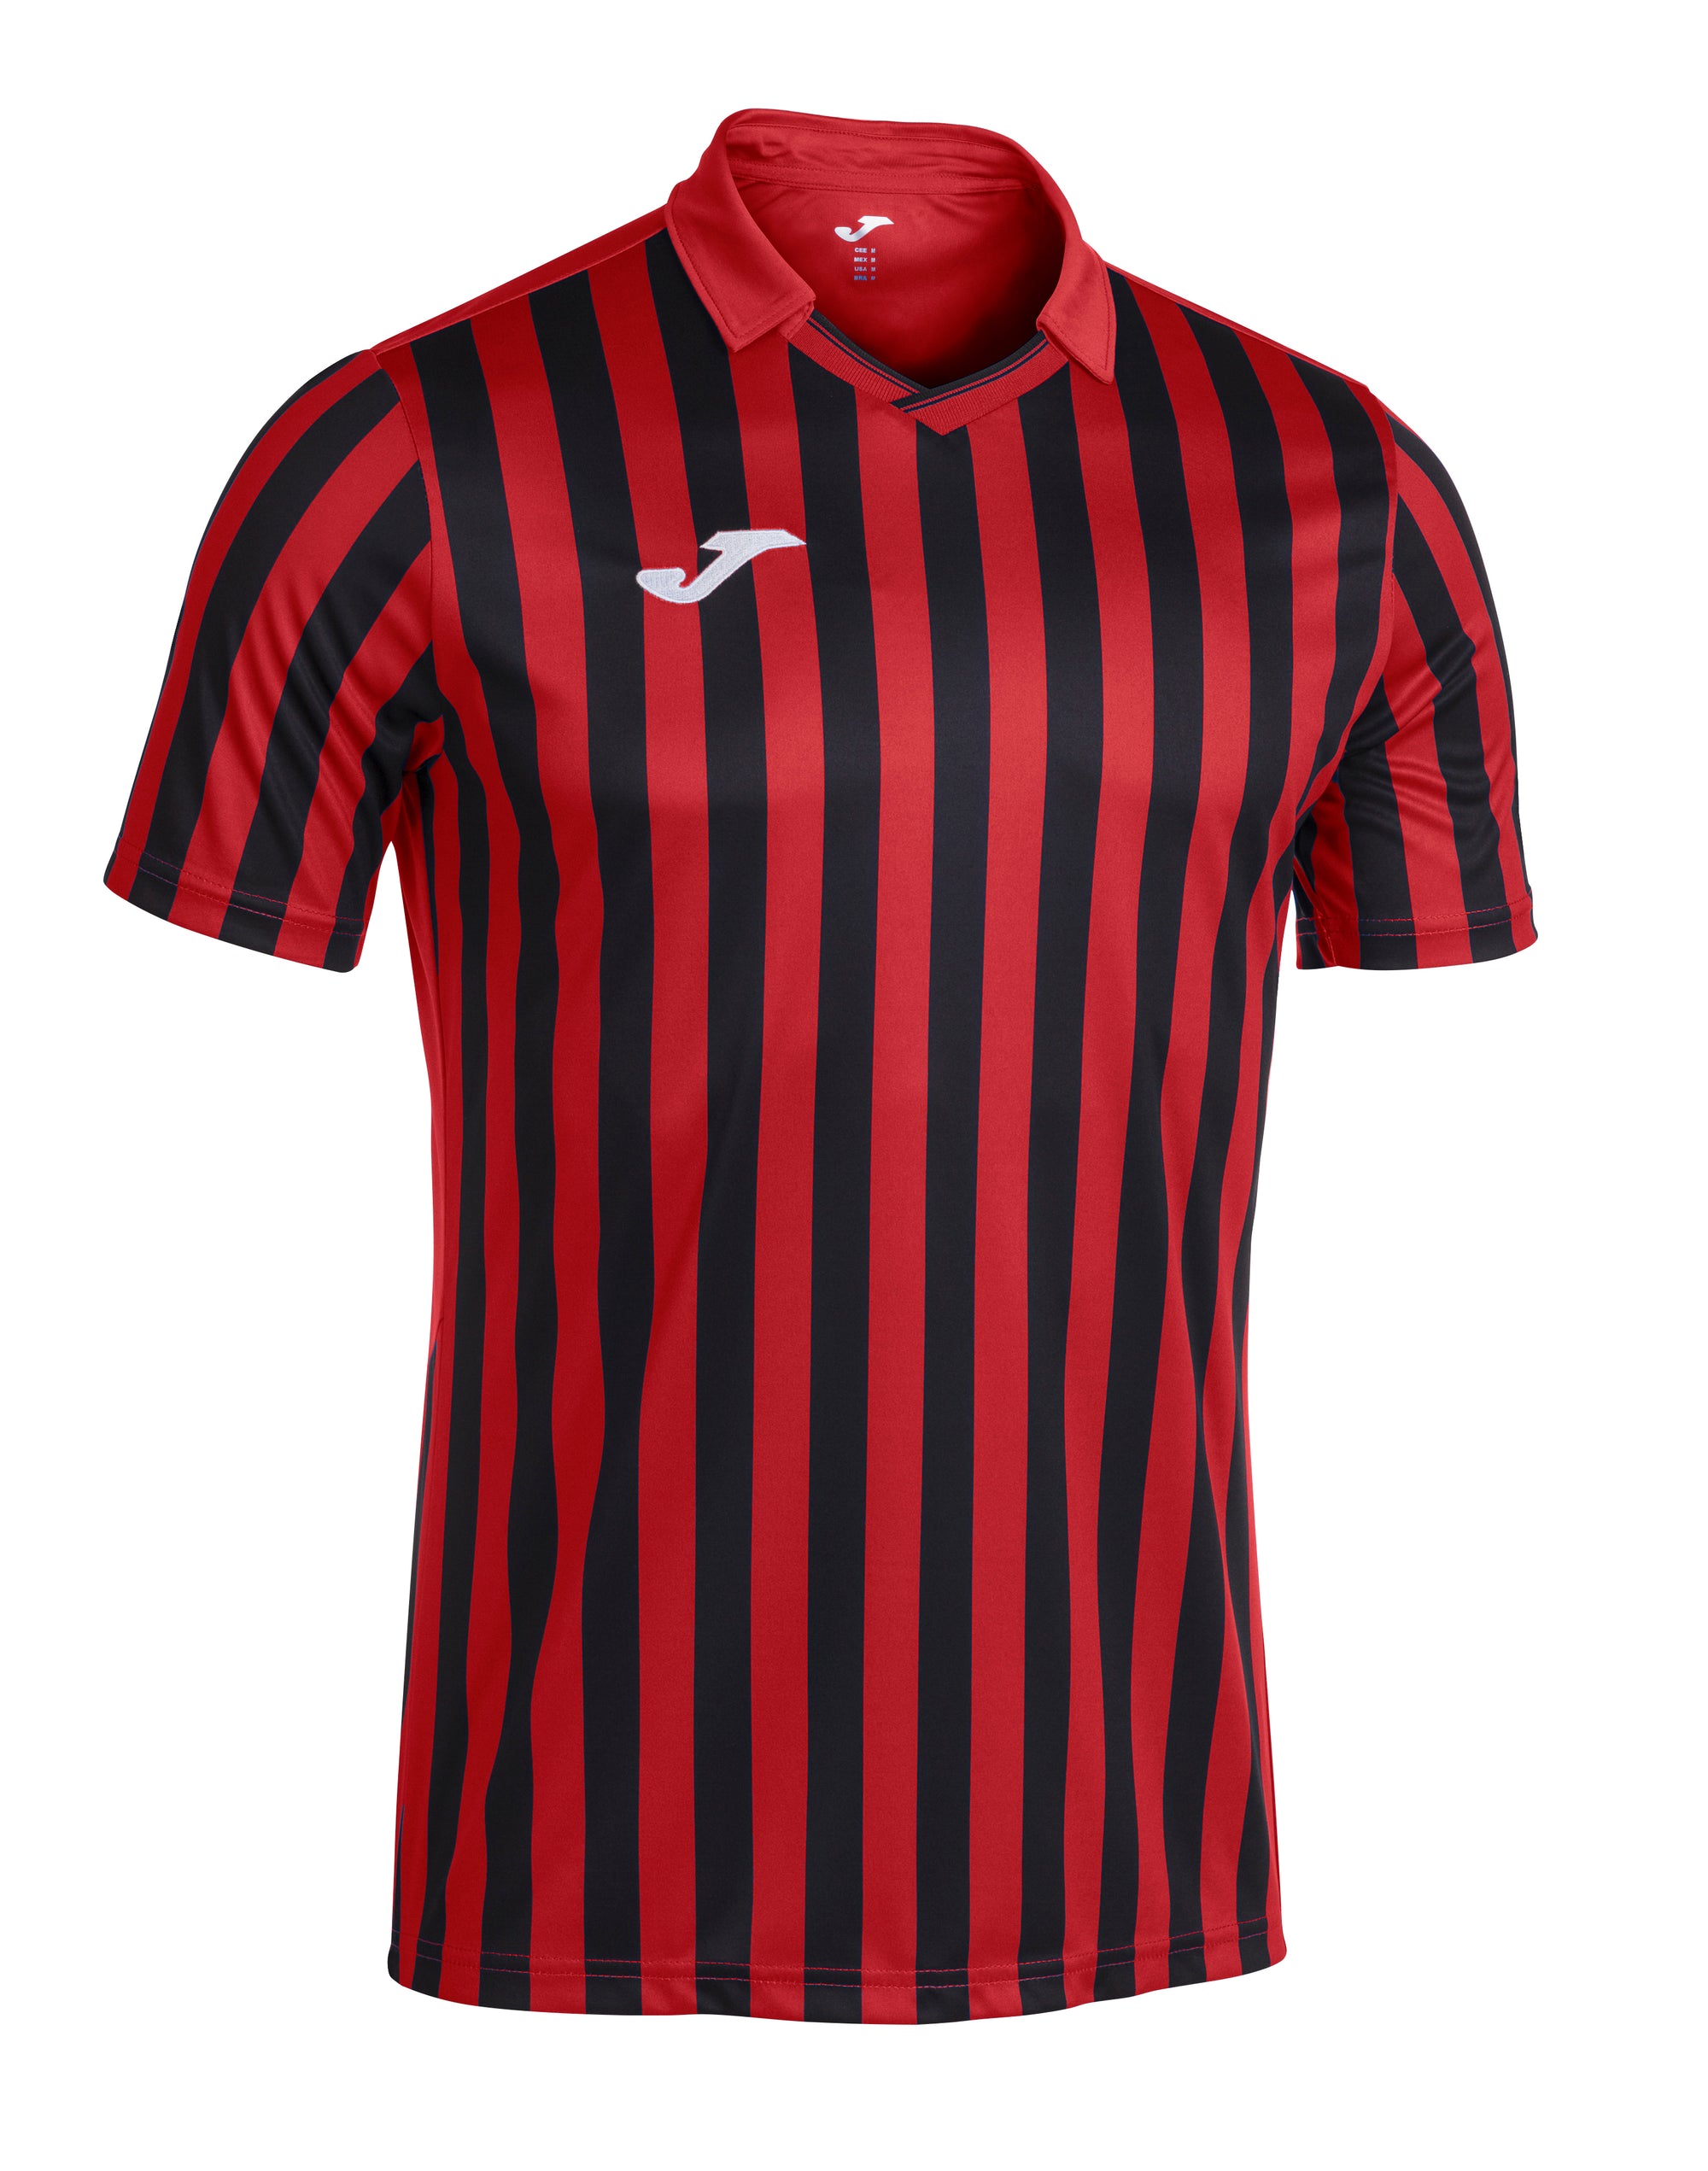 Joma Copa II Short Sleeved T-Shirt - Red/Black